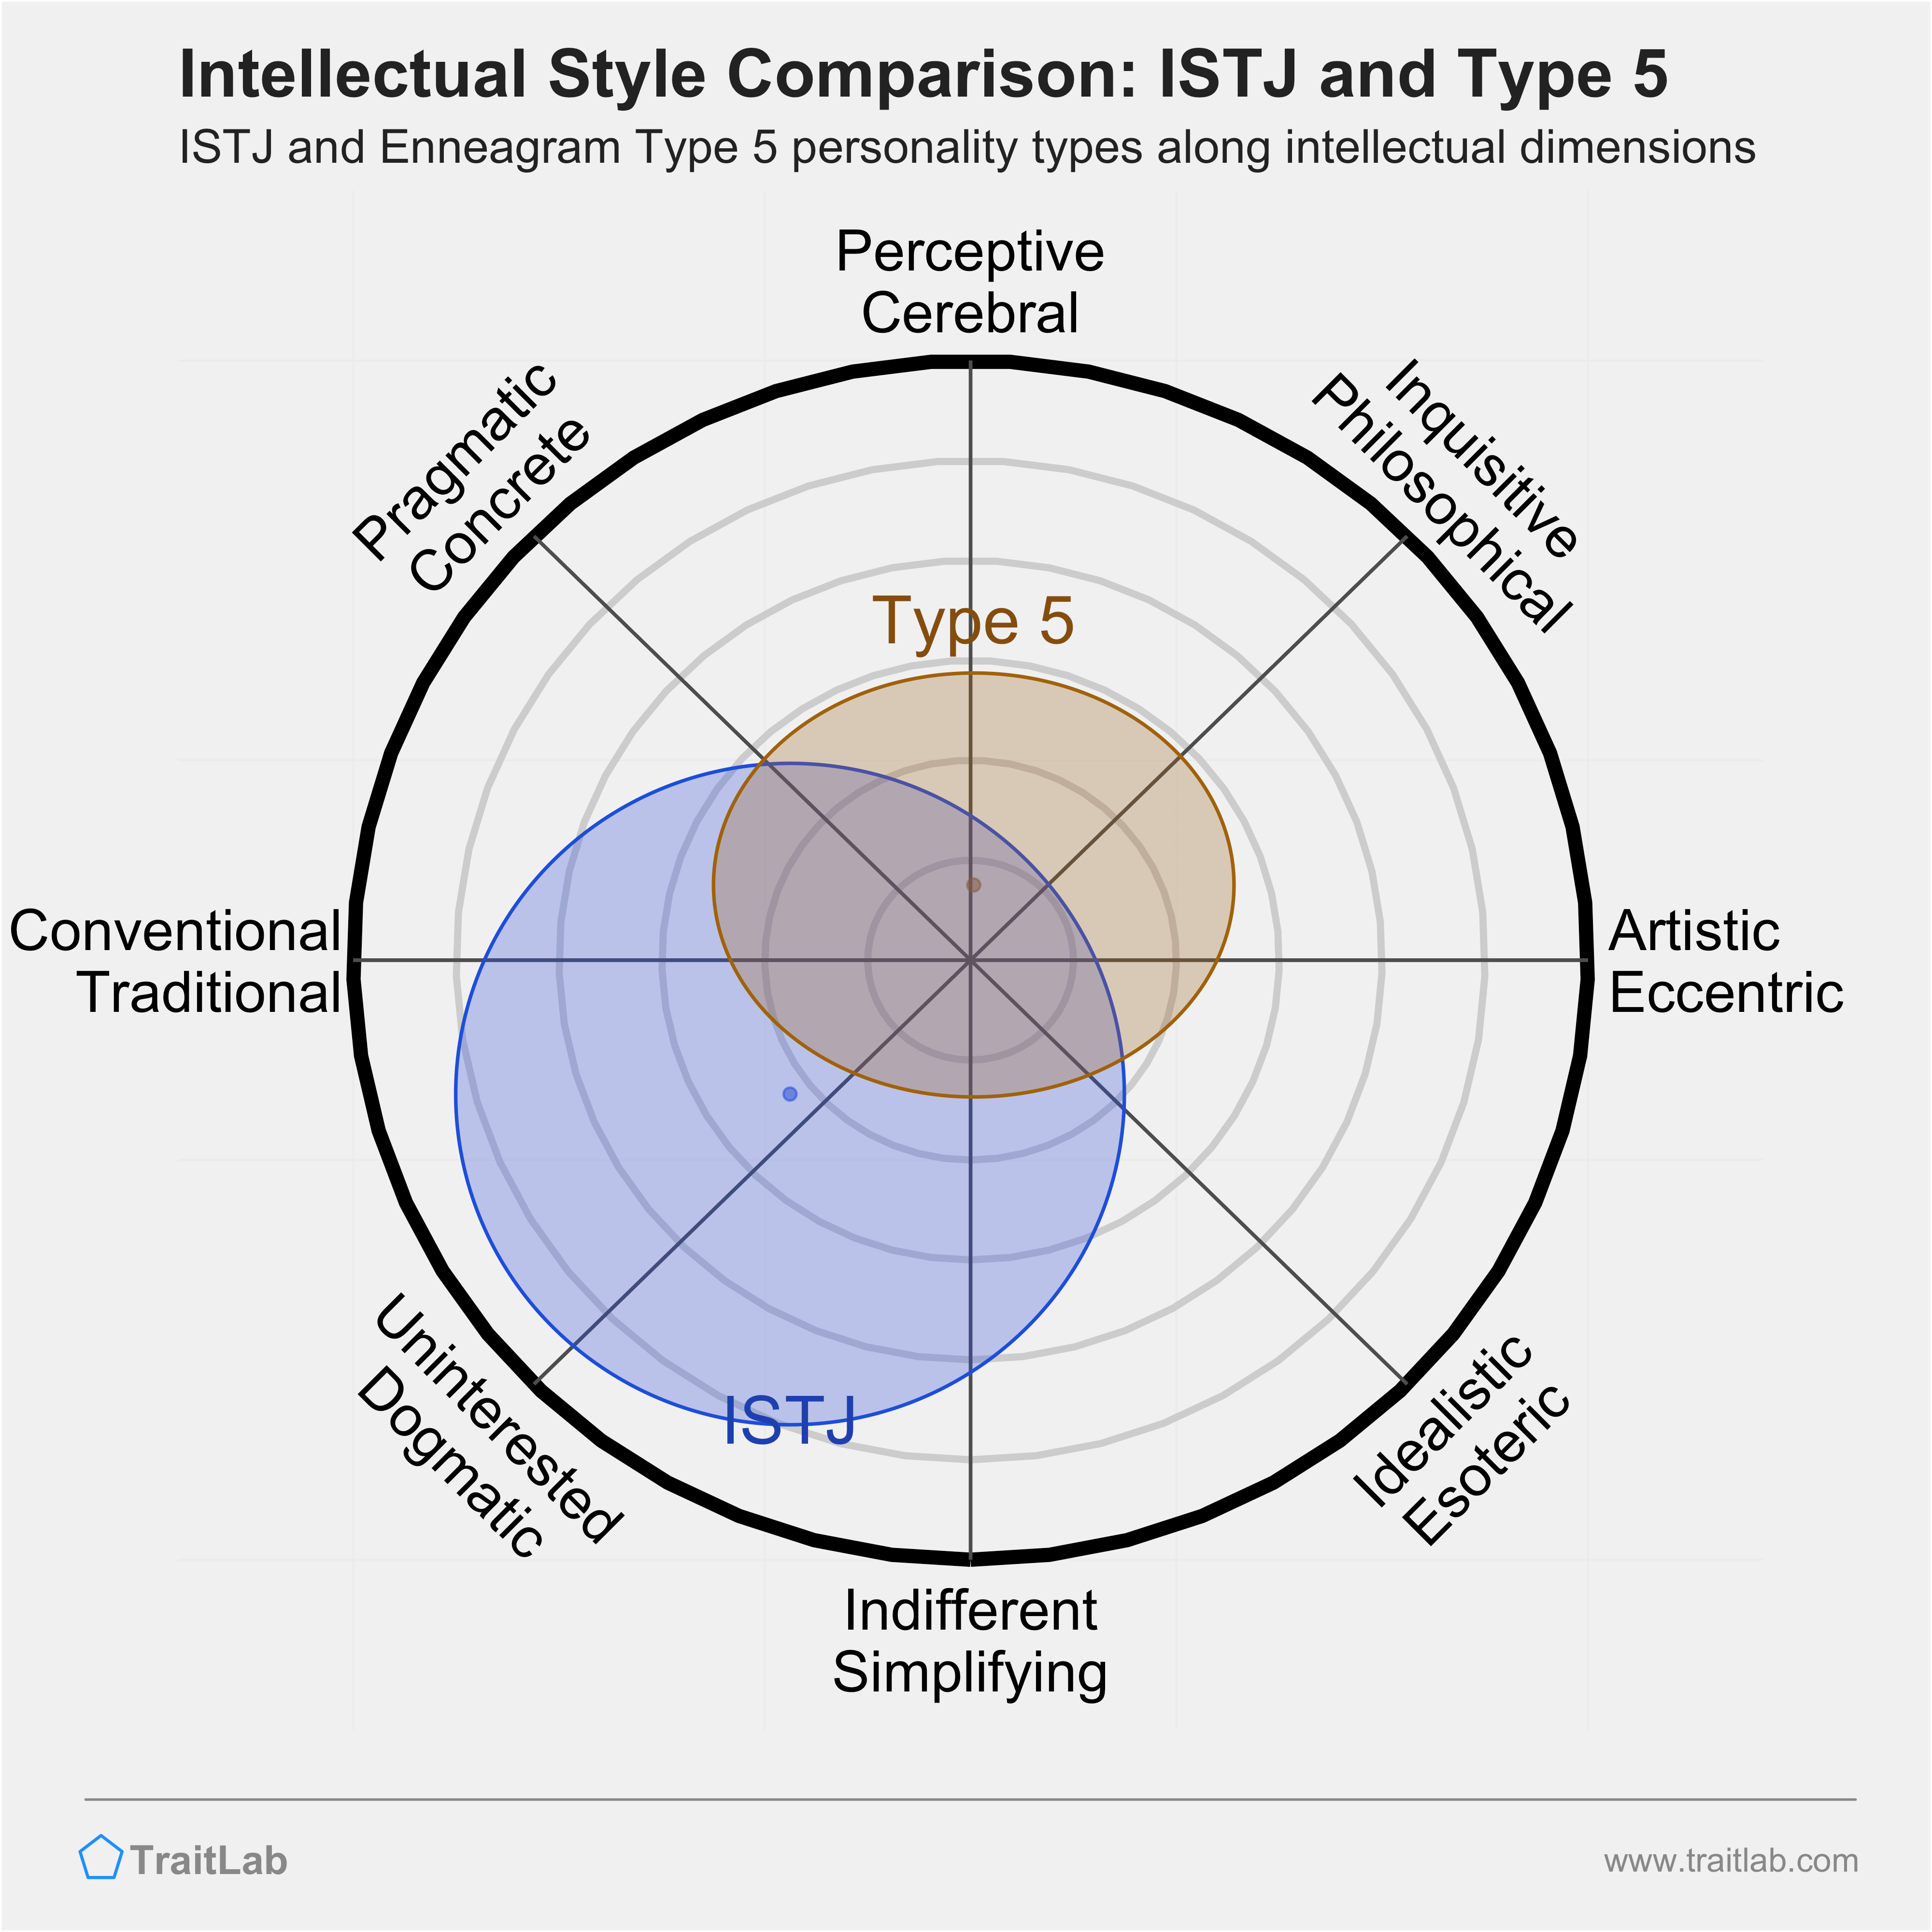 ISTJ and Type 5 comparison across intellectual dimensions